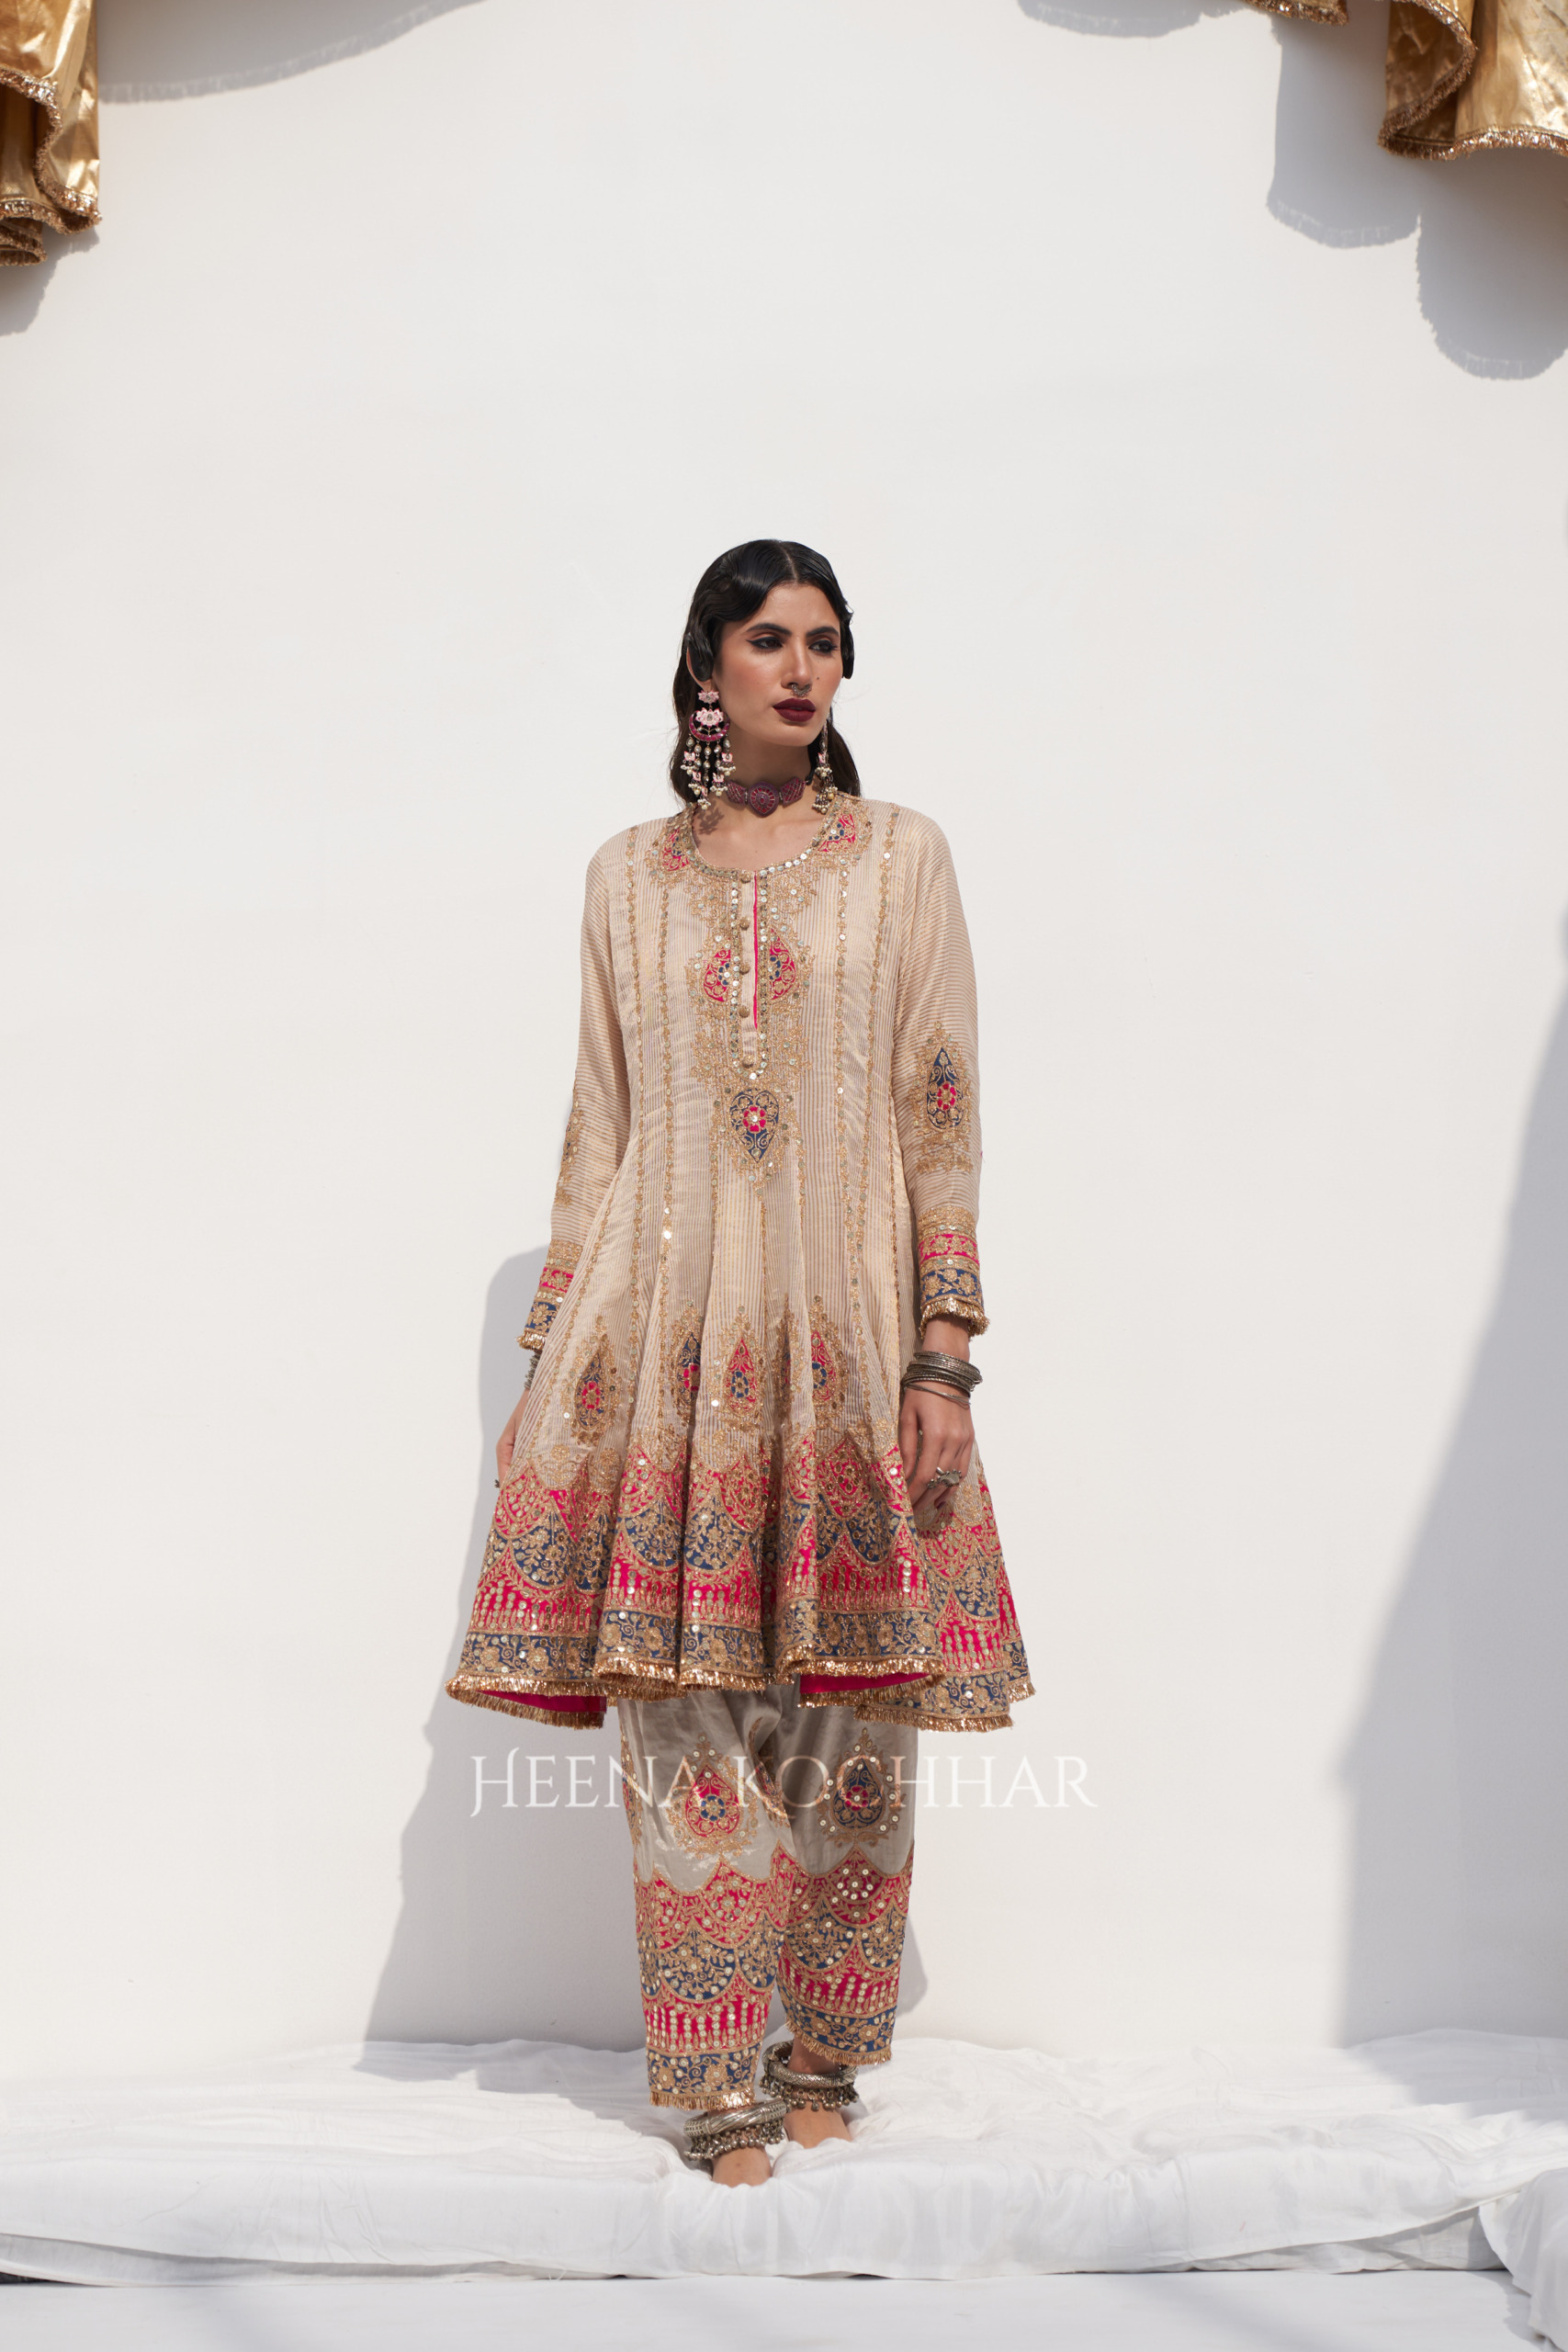 42 Heena Kochar ideas  indian designer outfits, pakistani dress